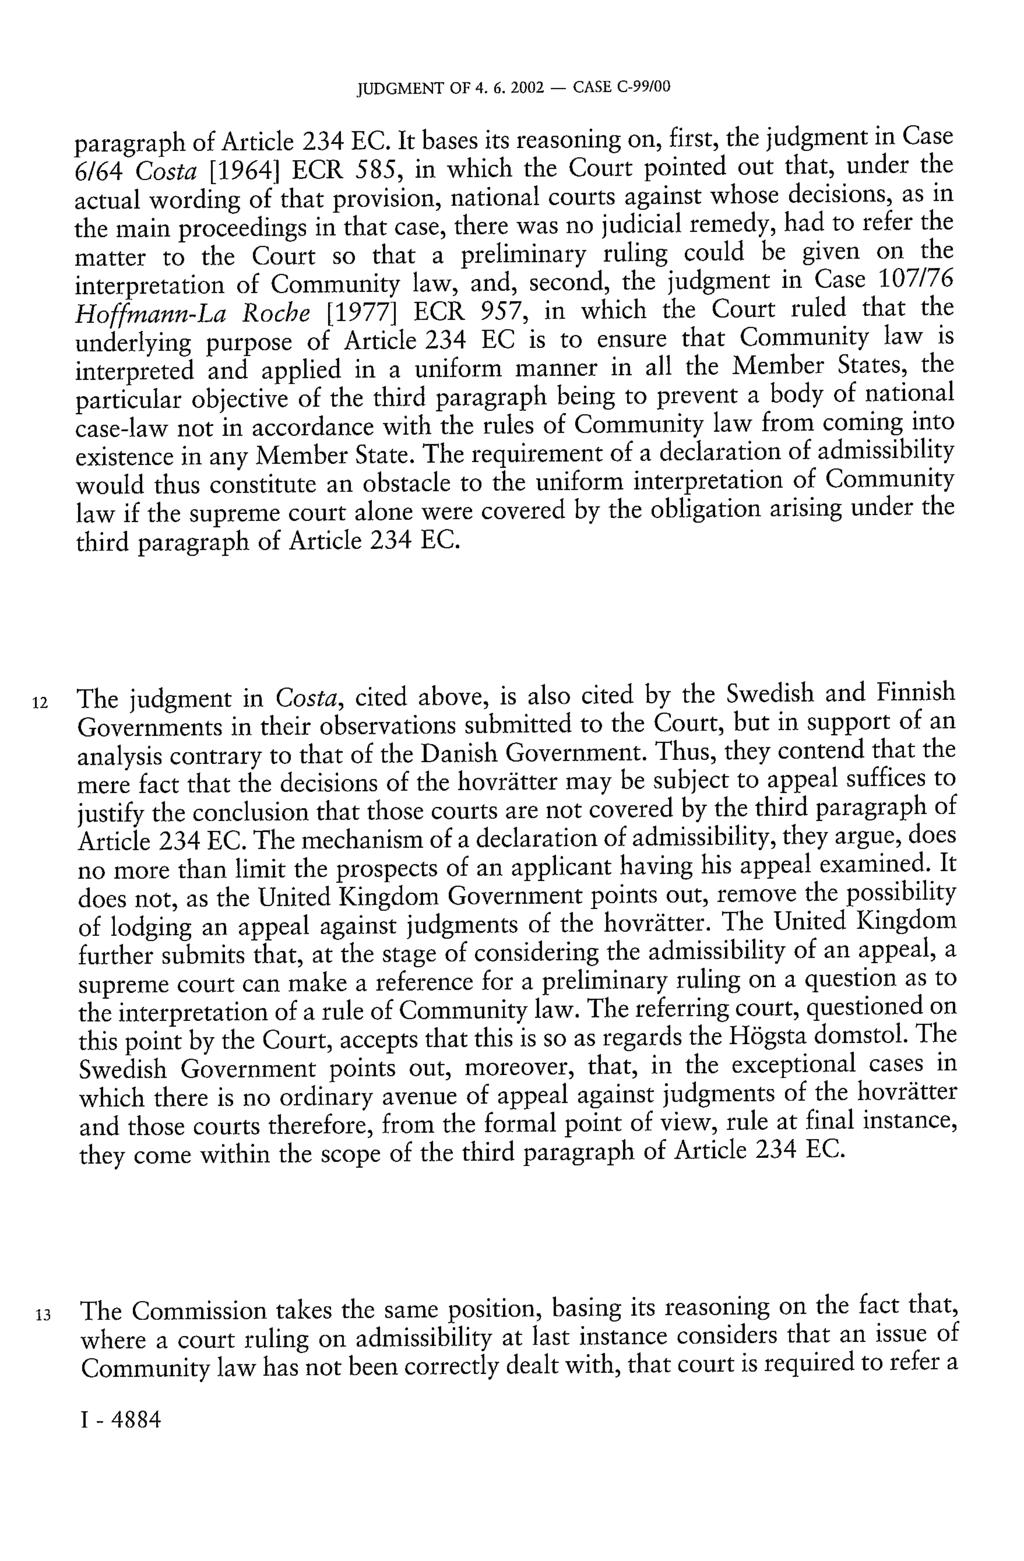 paragraph of Article 234 EC.